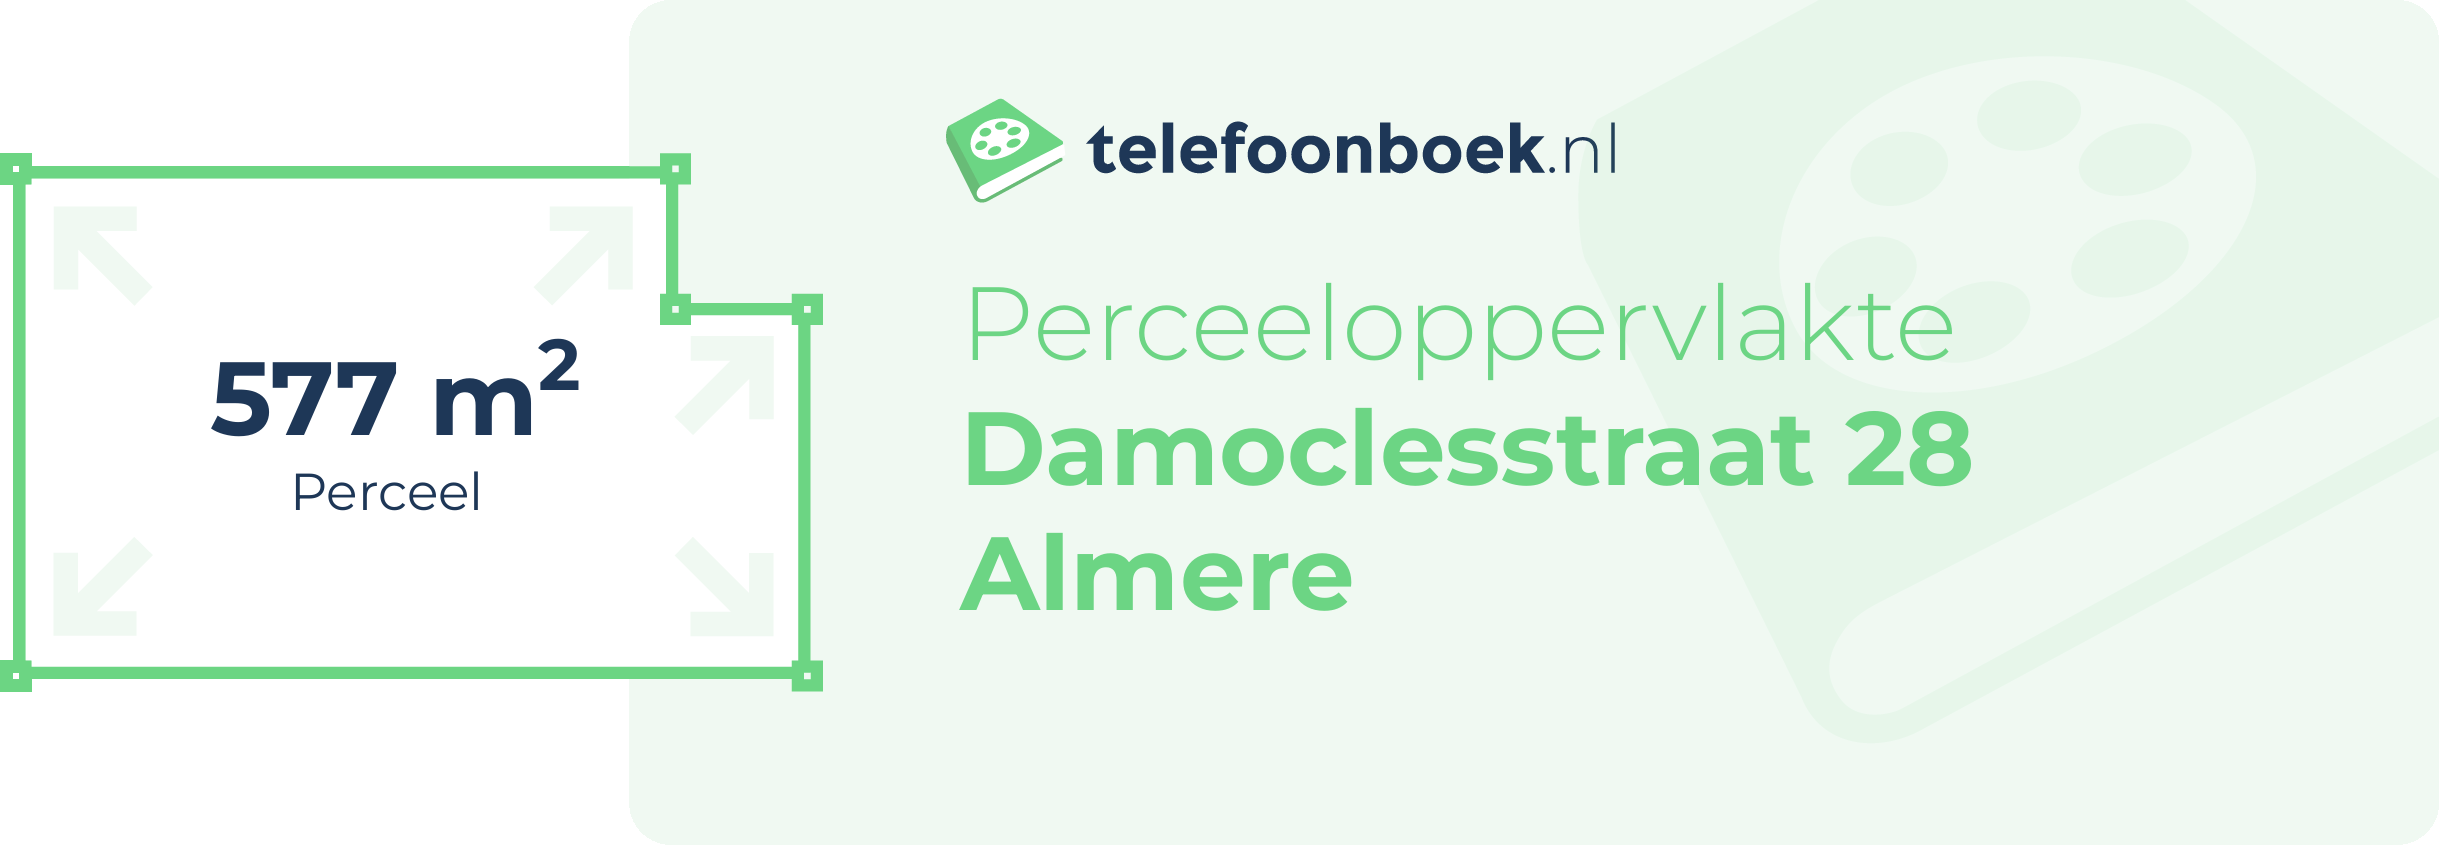 Perceeloppervlakte Damoclesstraat 28 Almere